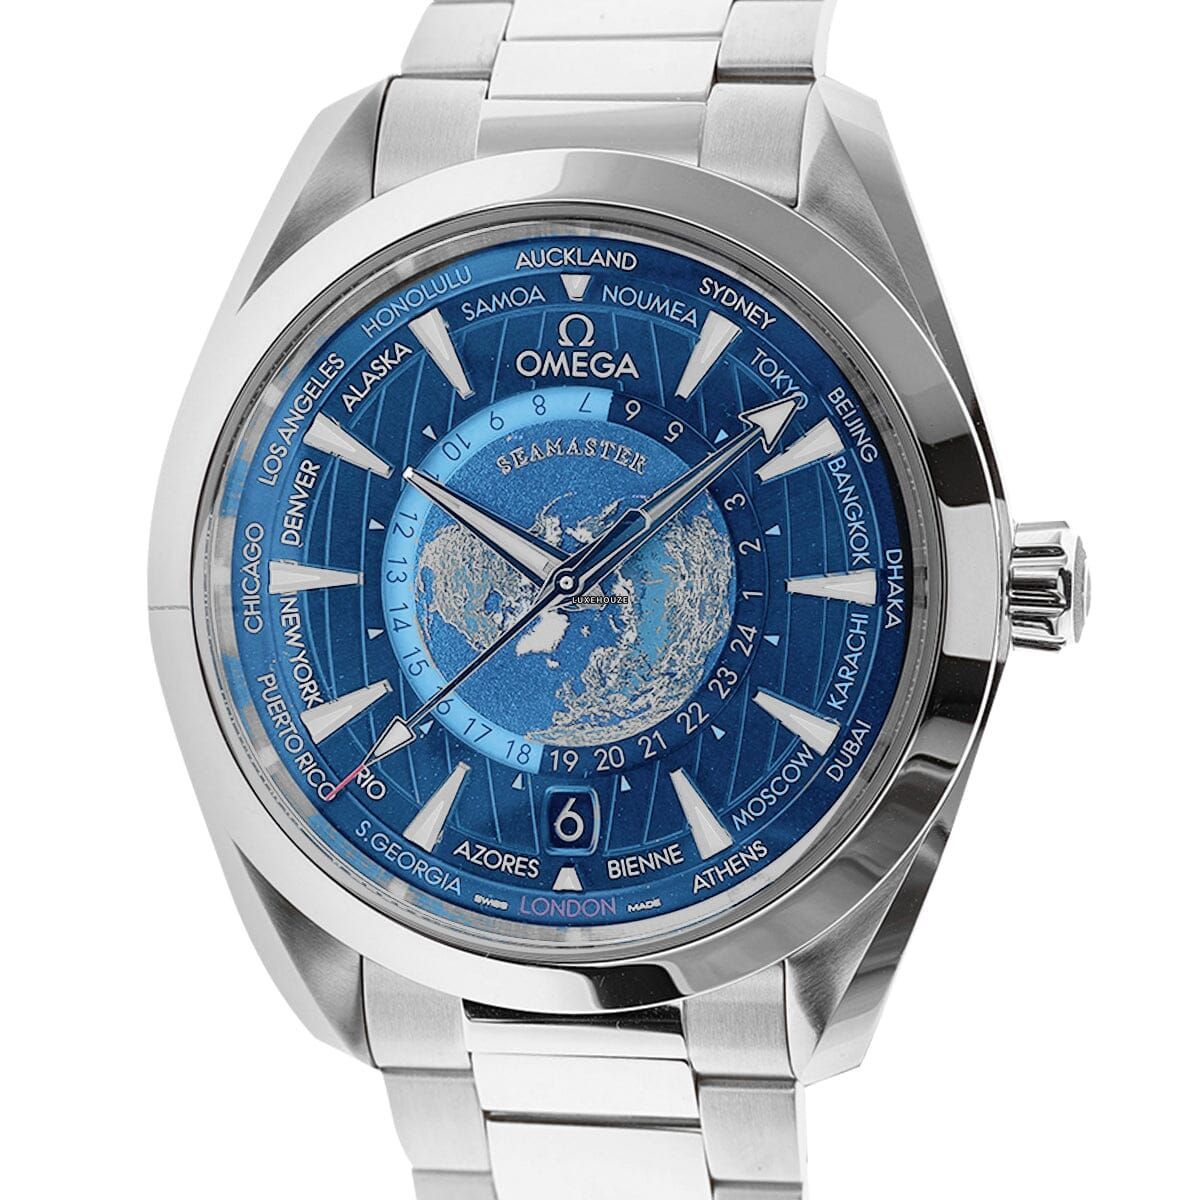 Seamaster Aqua Terra 150M 22010432203001 Worldtimer, Bracelet Watches Omega 